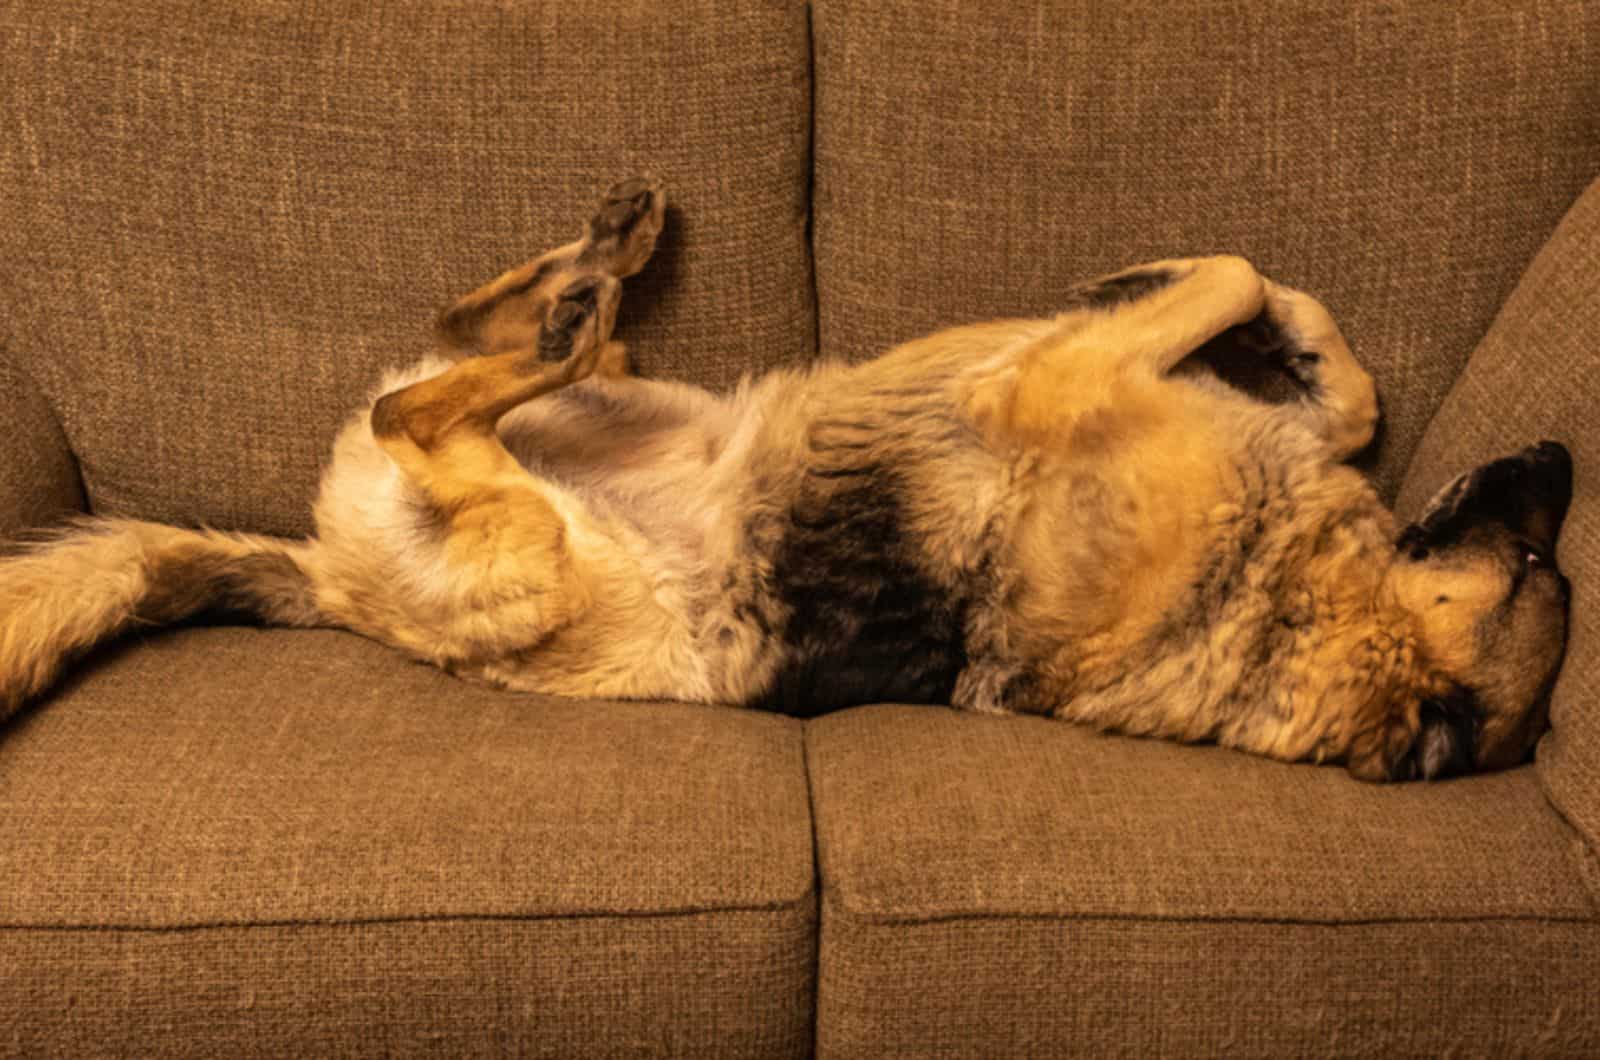 german shepherd dog sleeping upside down on the couch